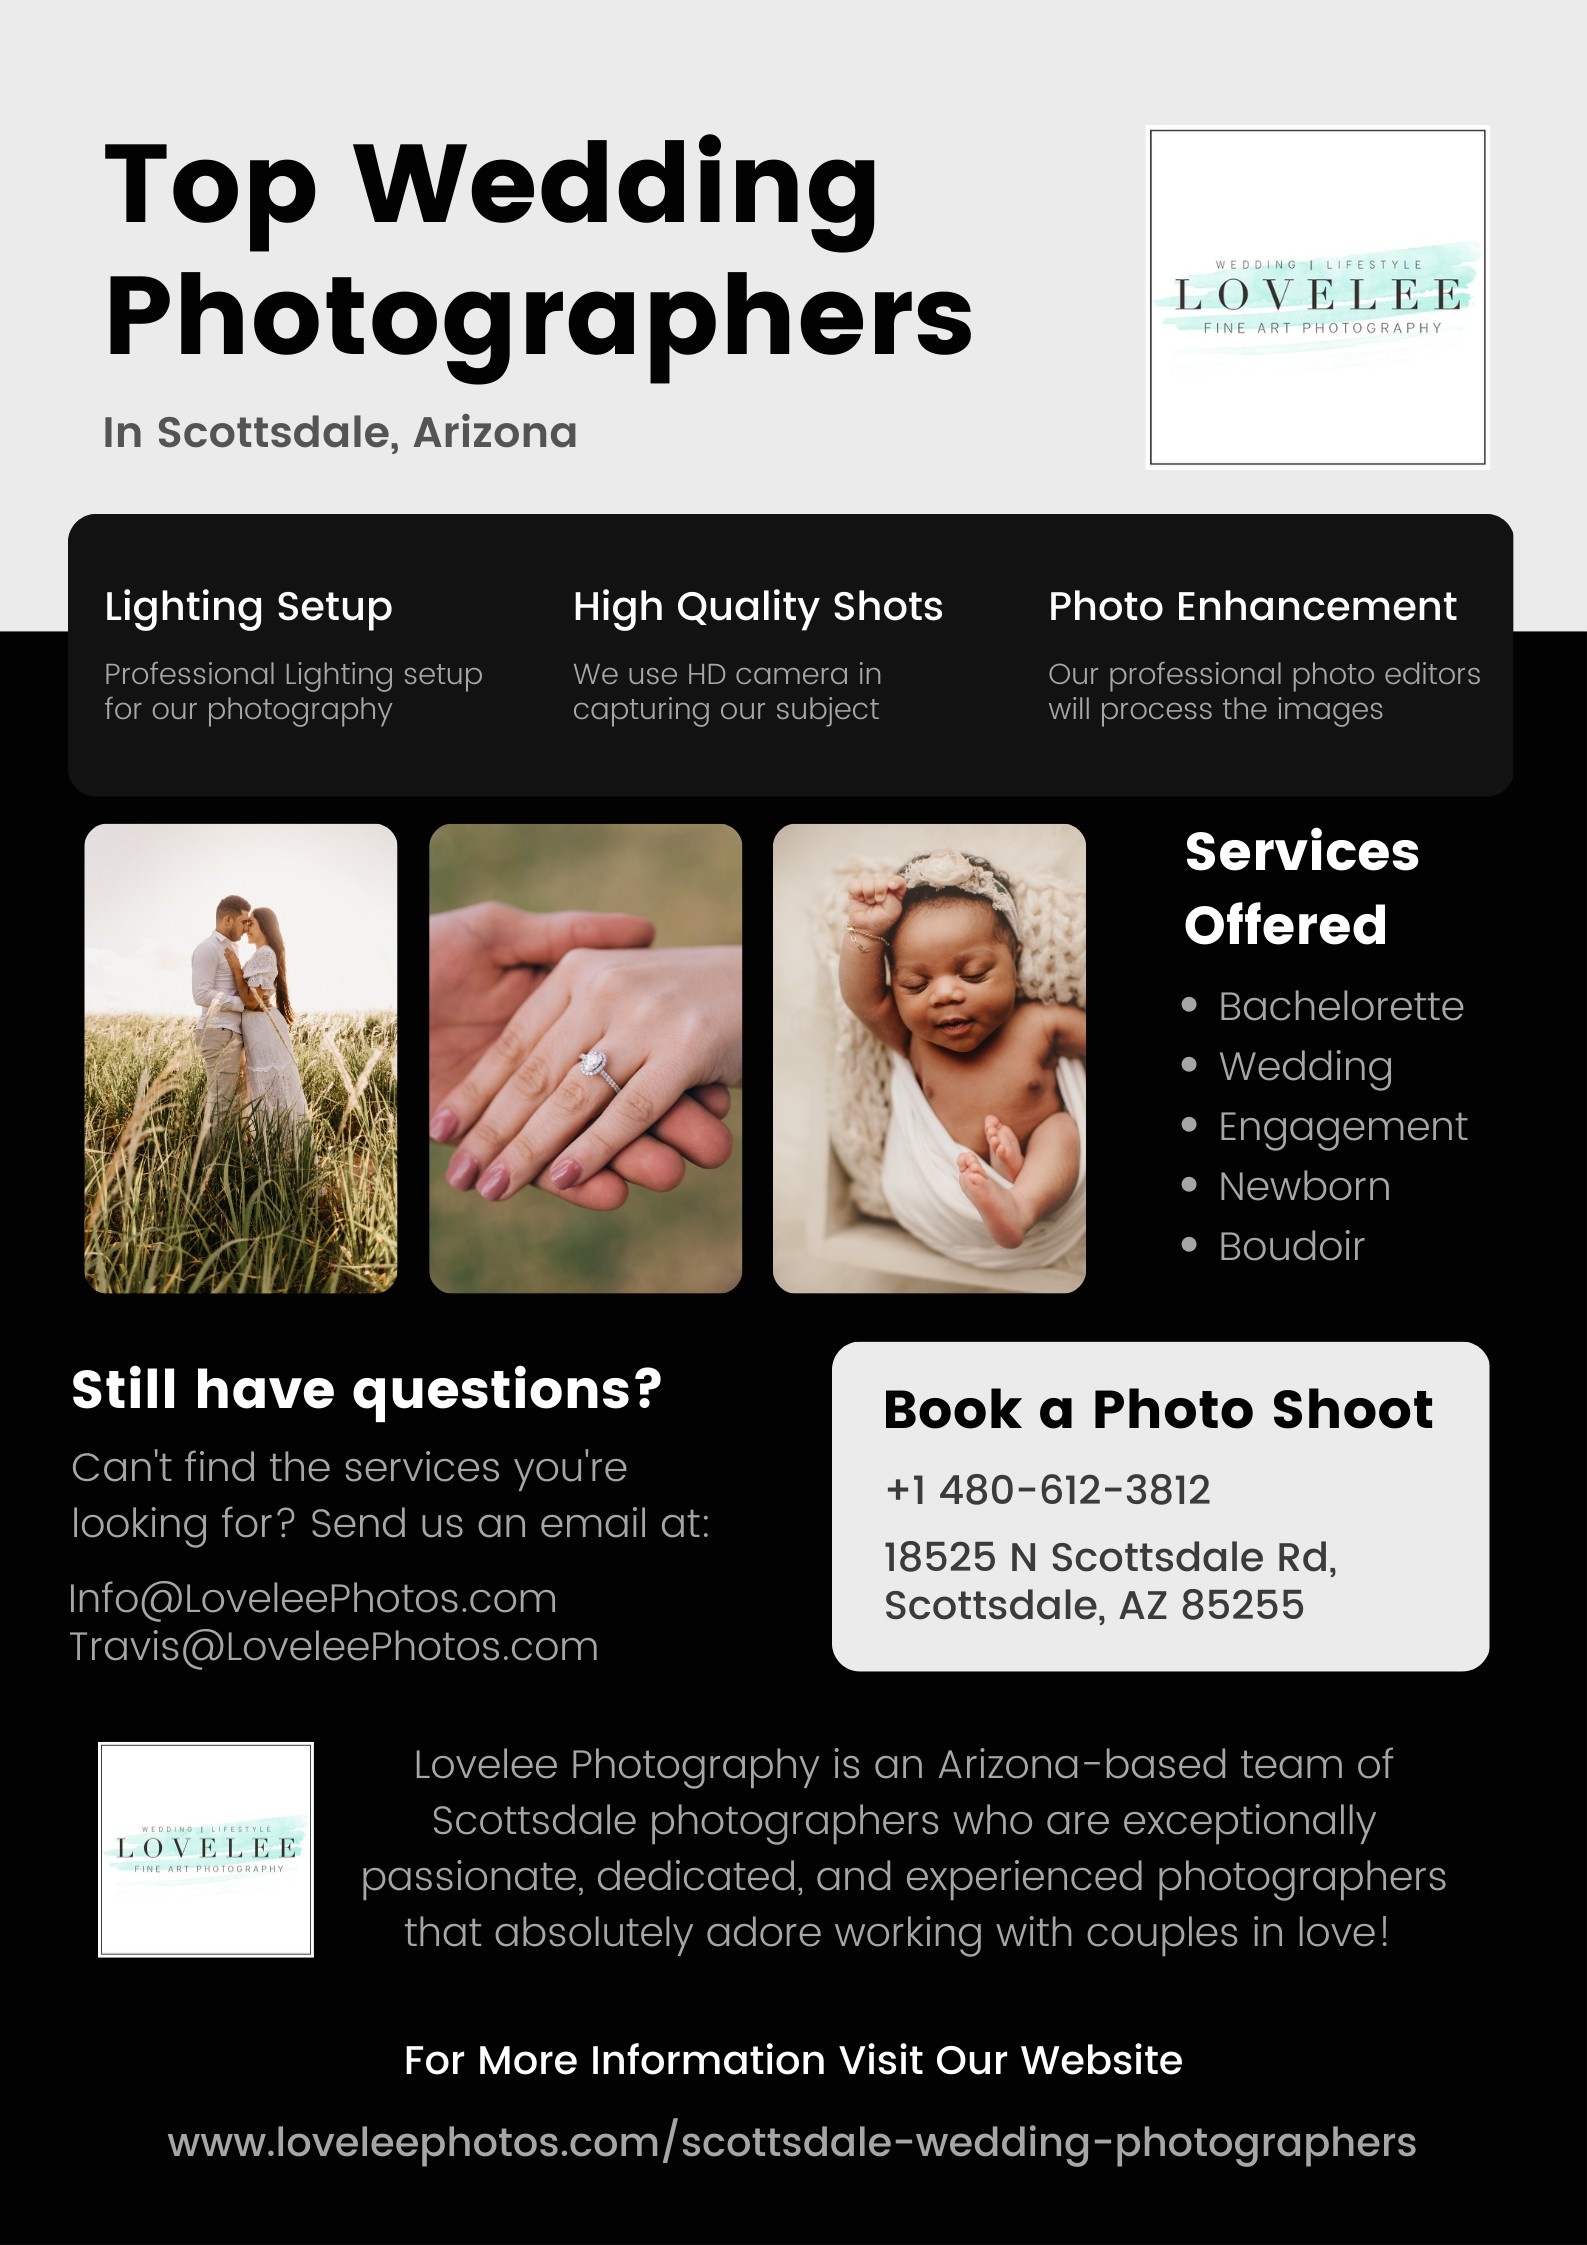 Top Wedding Photographers in Scottsdale, AZ - Lovelee Photography